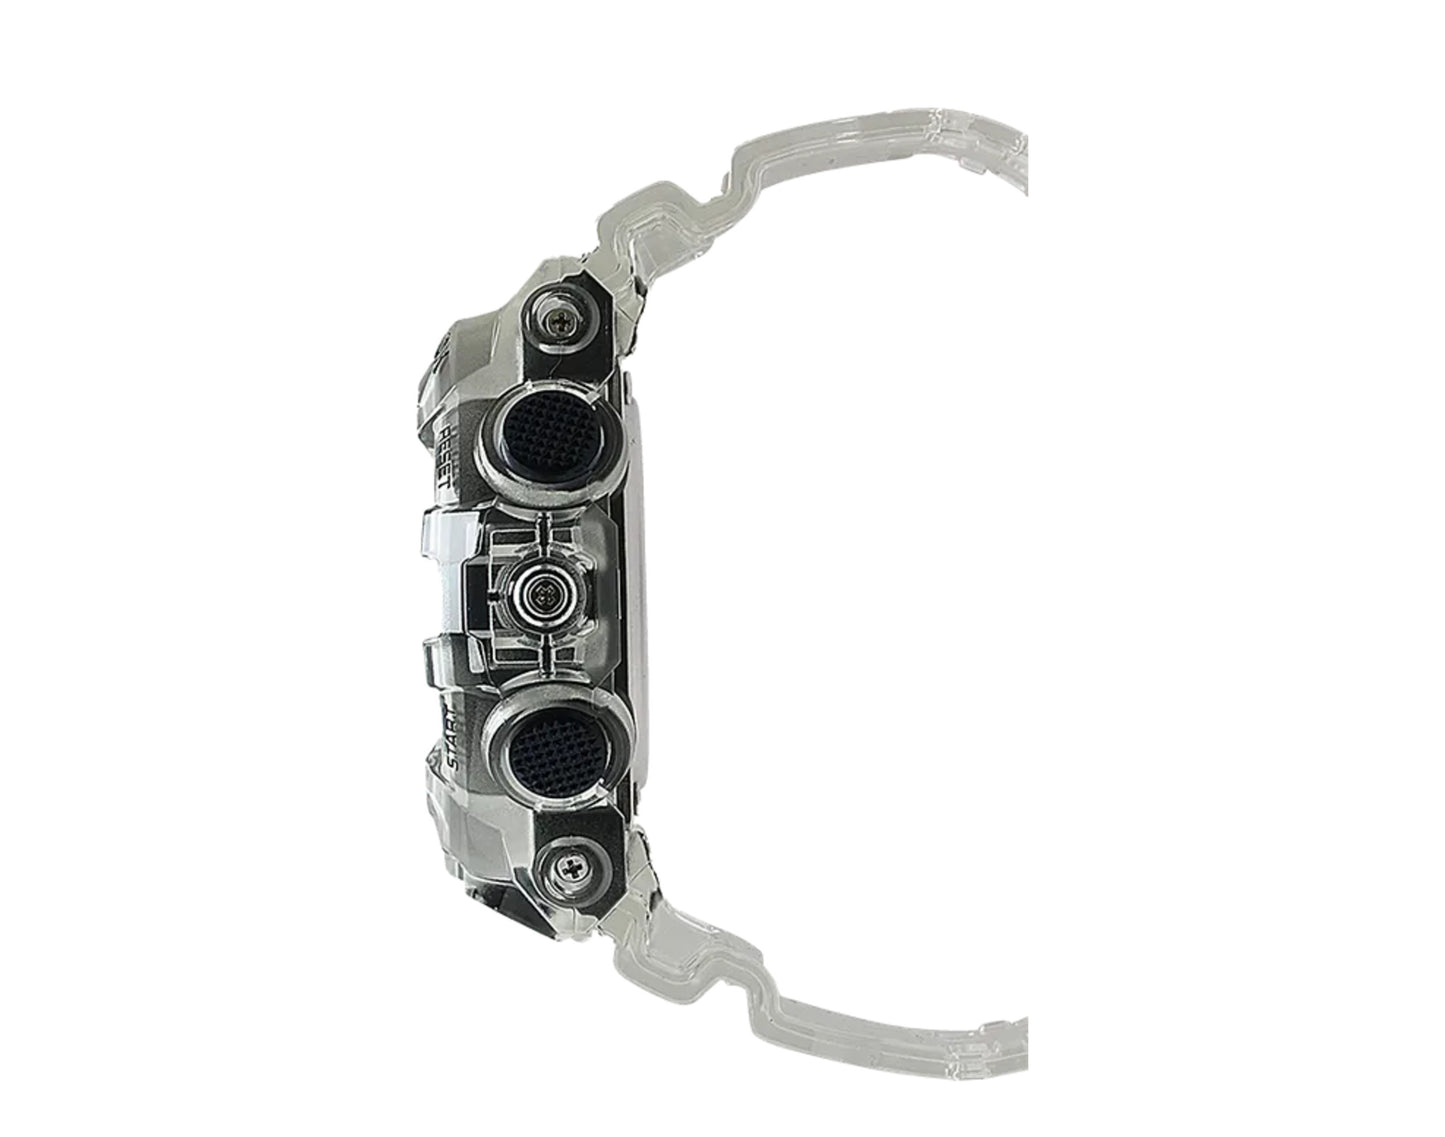 Casio G-Shock GA700SKE Transparent Pack Analog-Digital Resin Watch